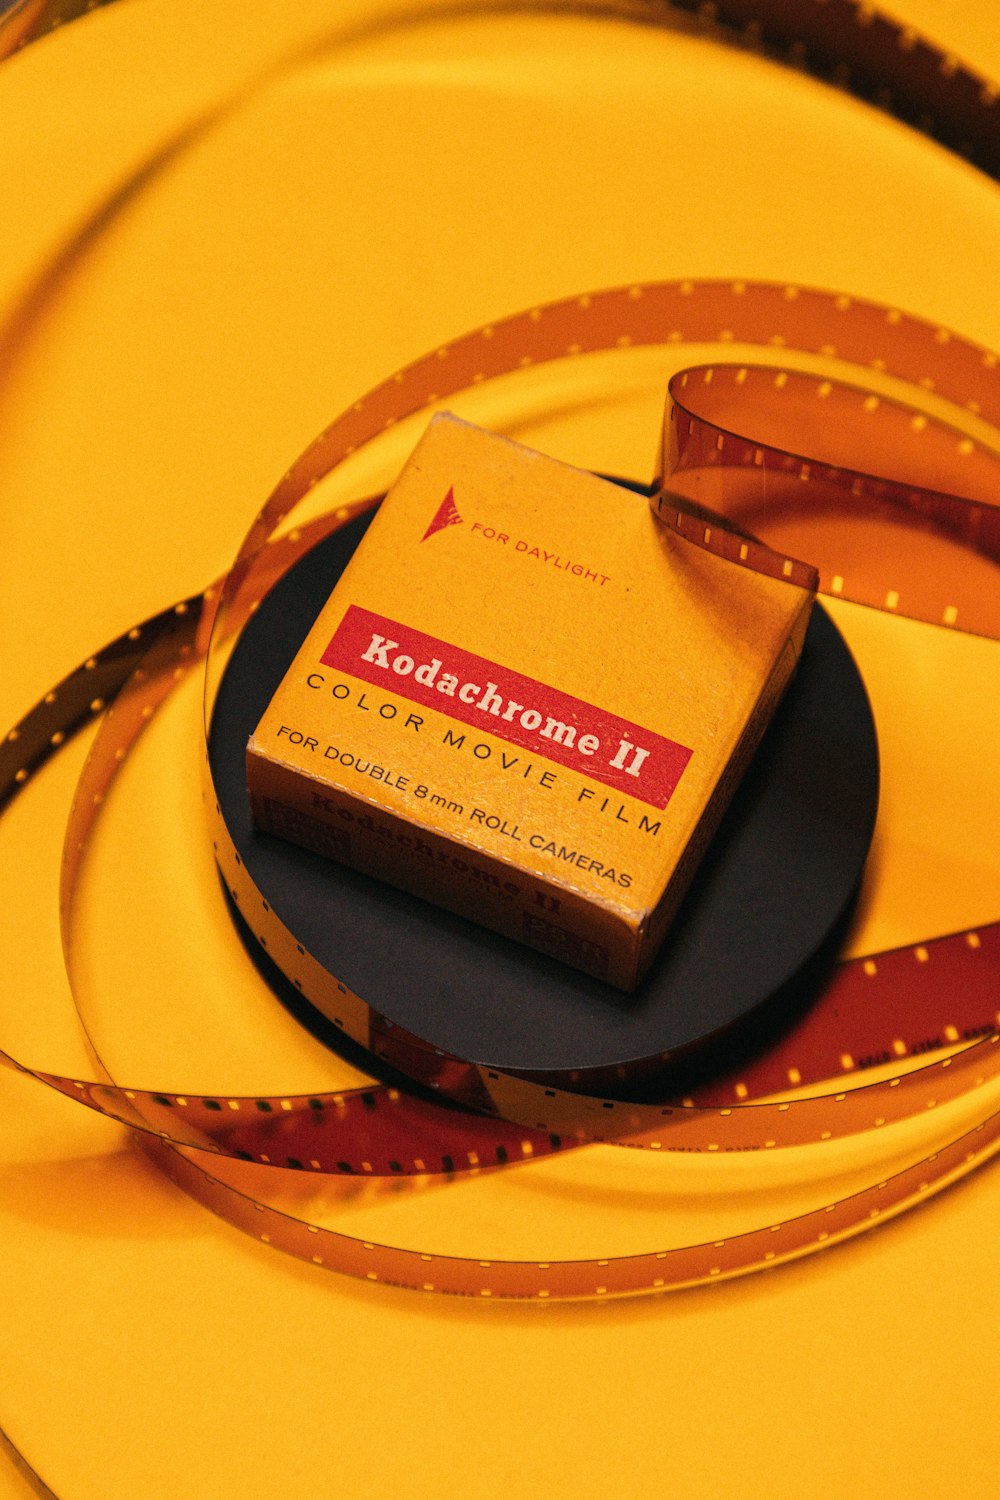 Kodachrome 2 컬러 무비 필름 박스